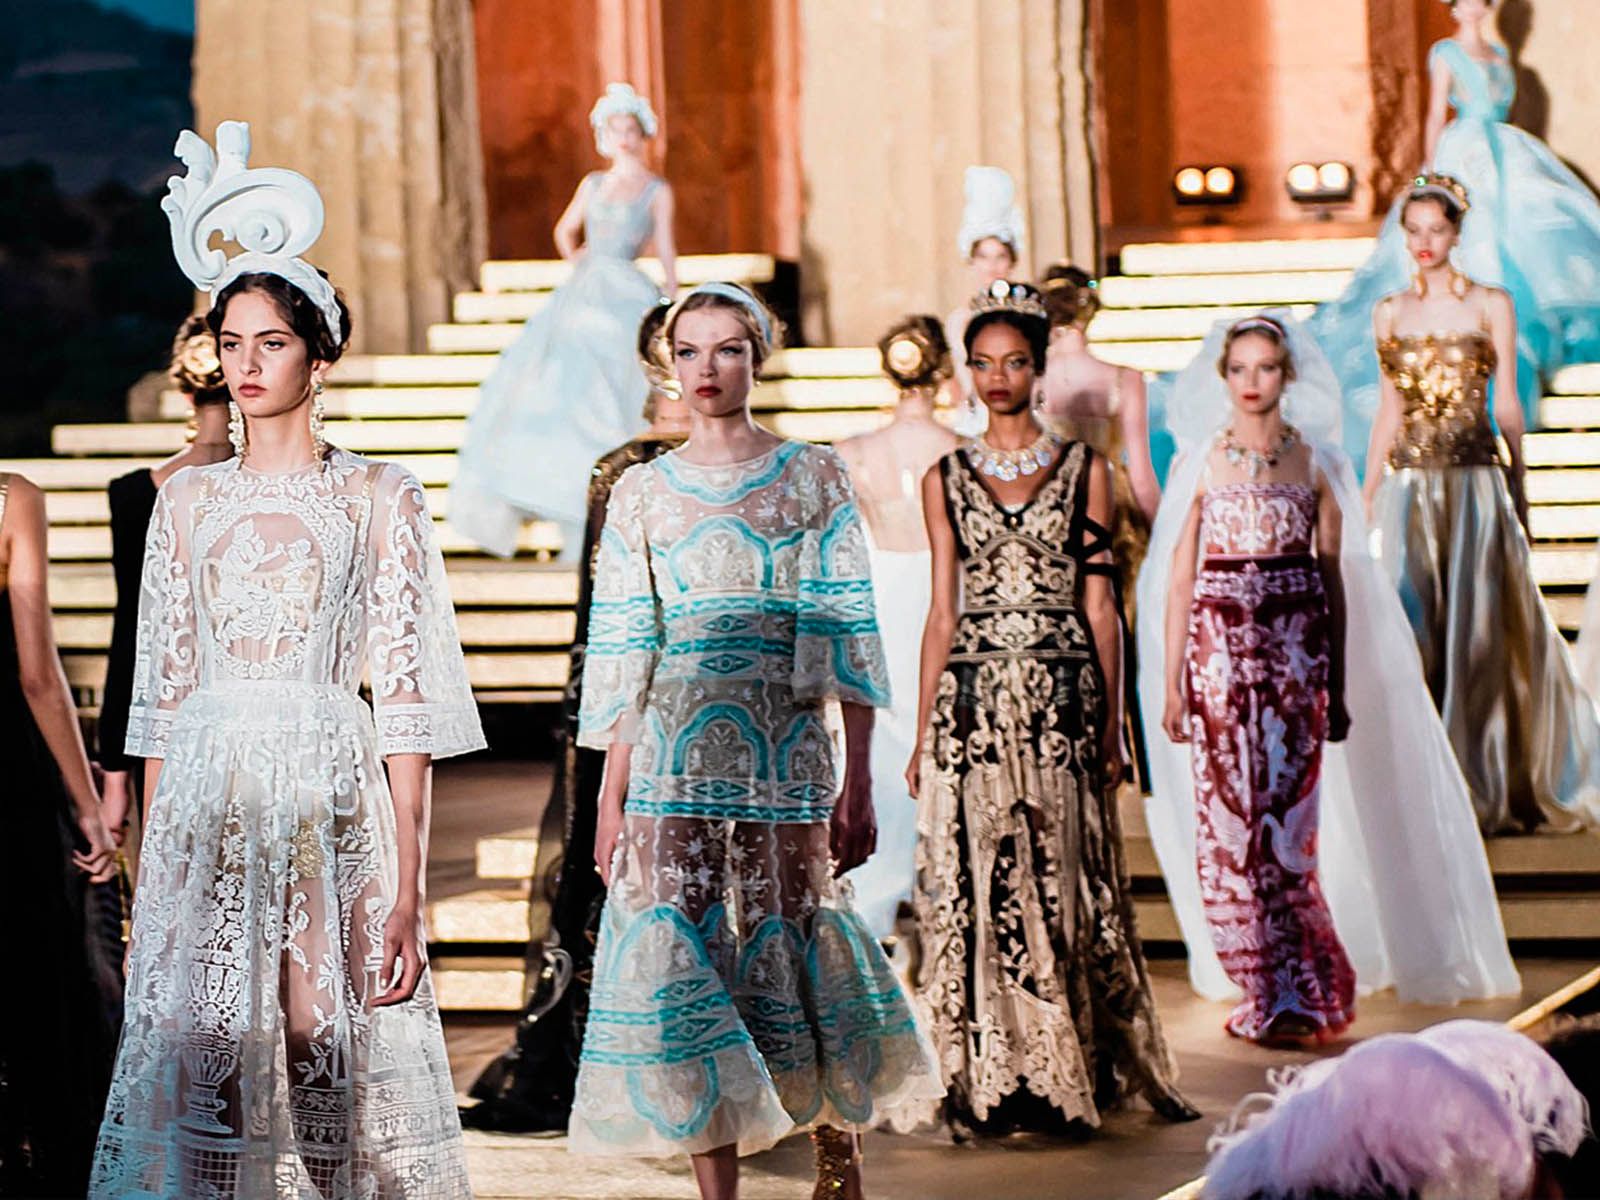 Dolce&Gabbana to present its Haute Couture collection in Puglia